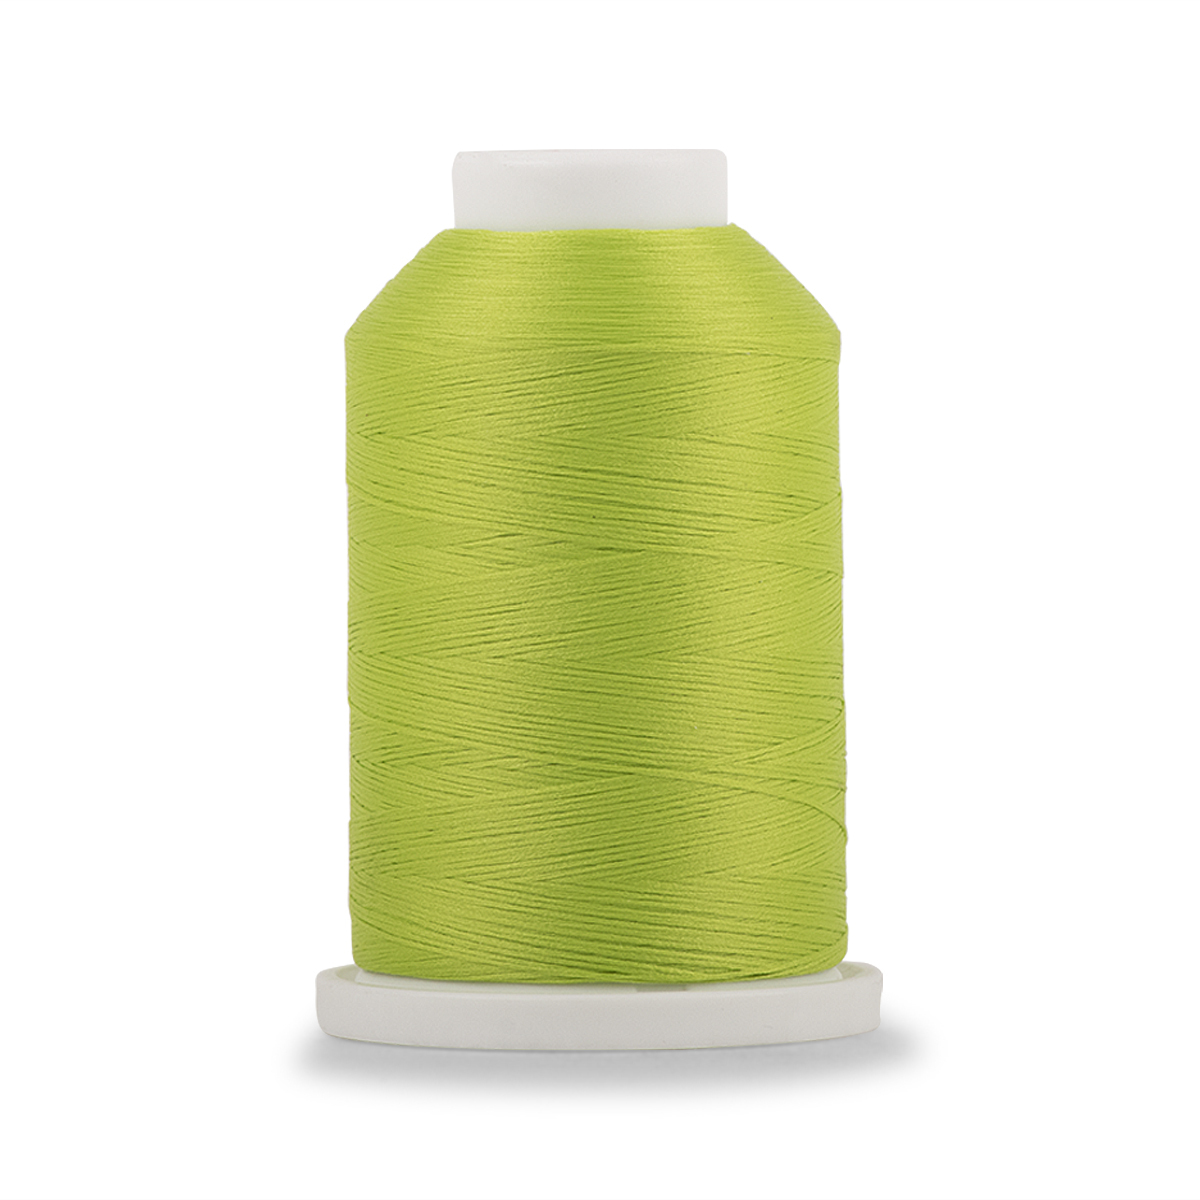 Madeira AeroLock Polyester Premium Serger Thread - Bright Turquoise –  SewBatik